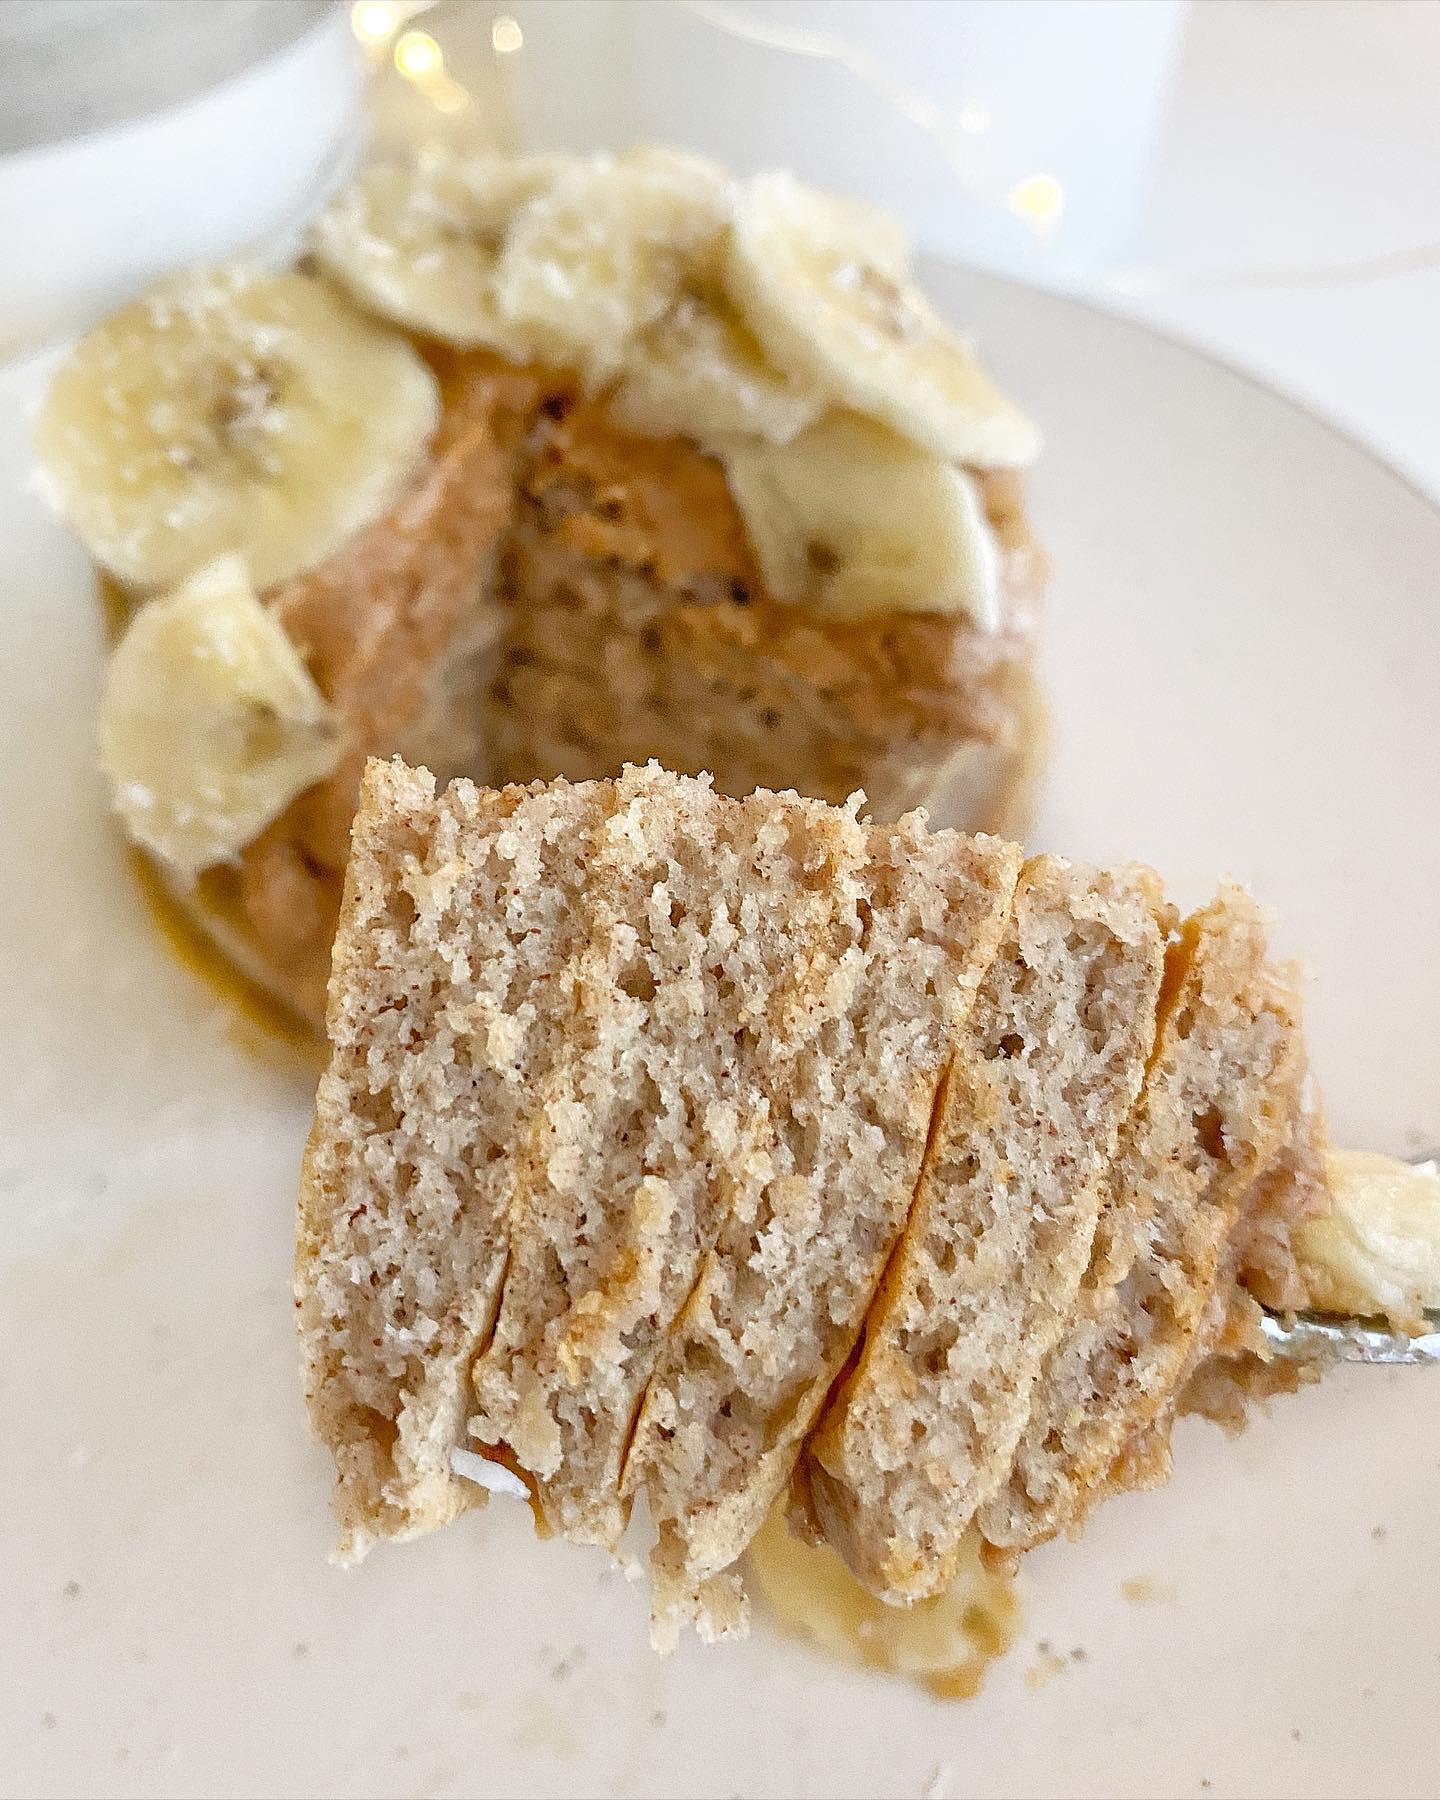 Cinnamon Vanilla Pancakes with Peanut Butter, Honey, and Banana